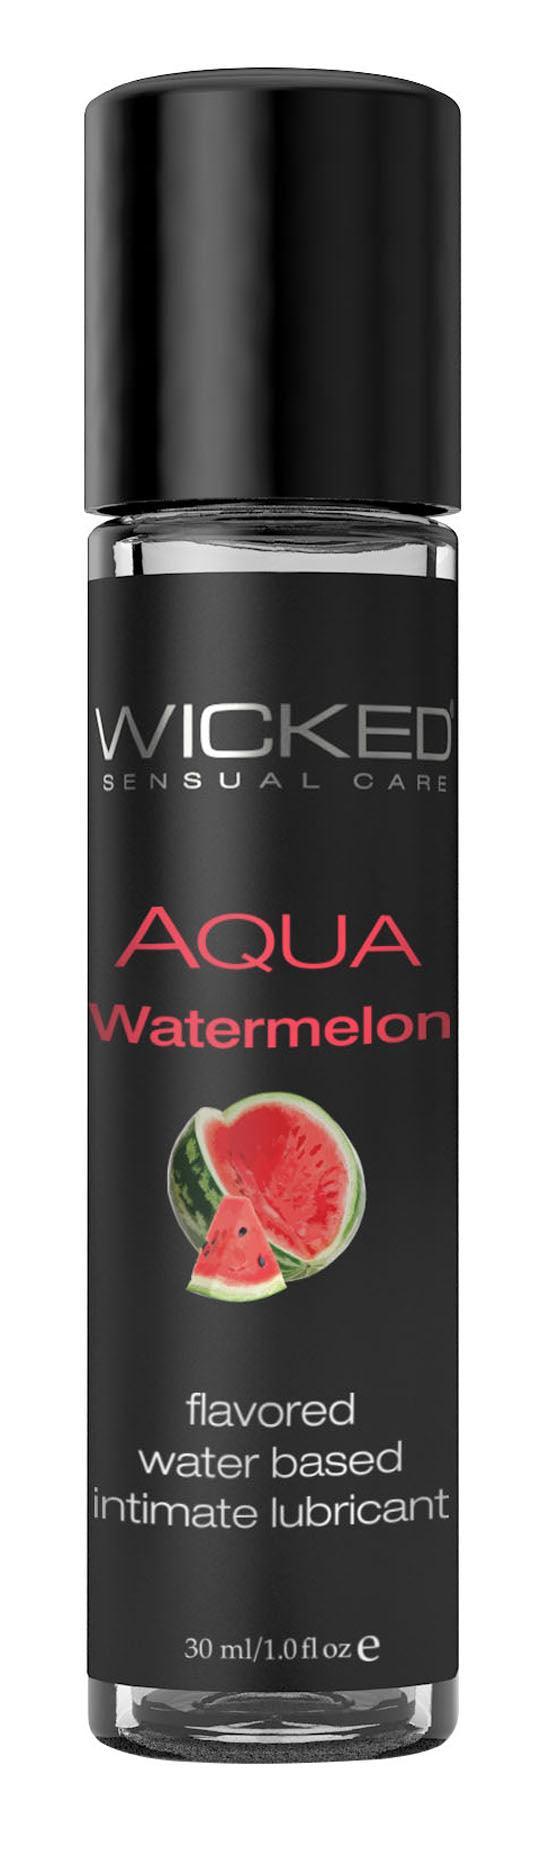 Aqua Watermelon Flavored Water Based Intimate Lubricant - 1 Fl. Oz. - My Sex Toy Hub